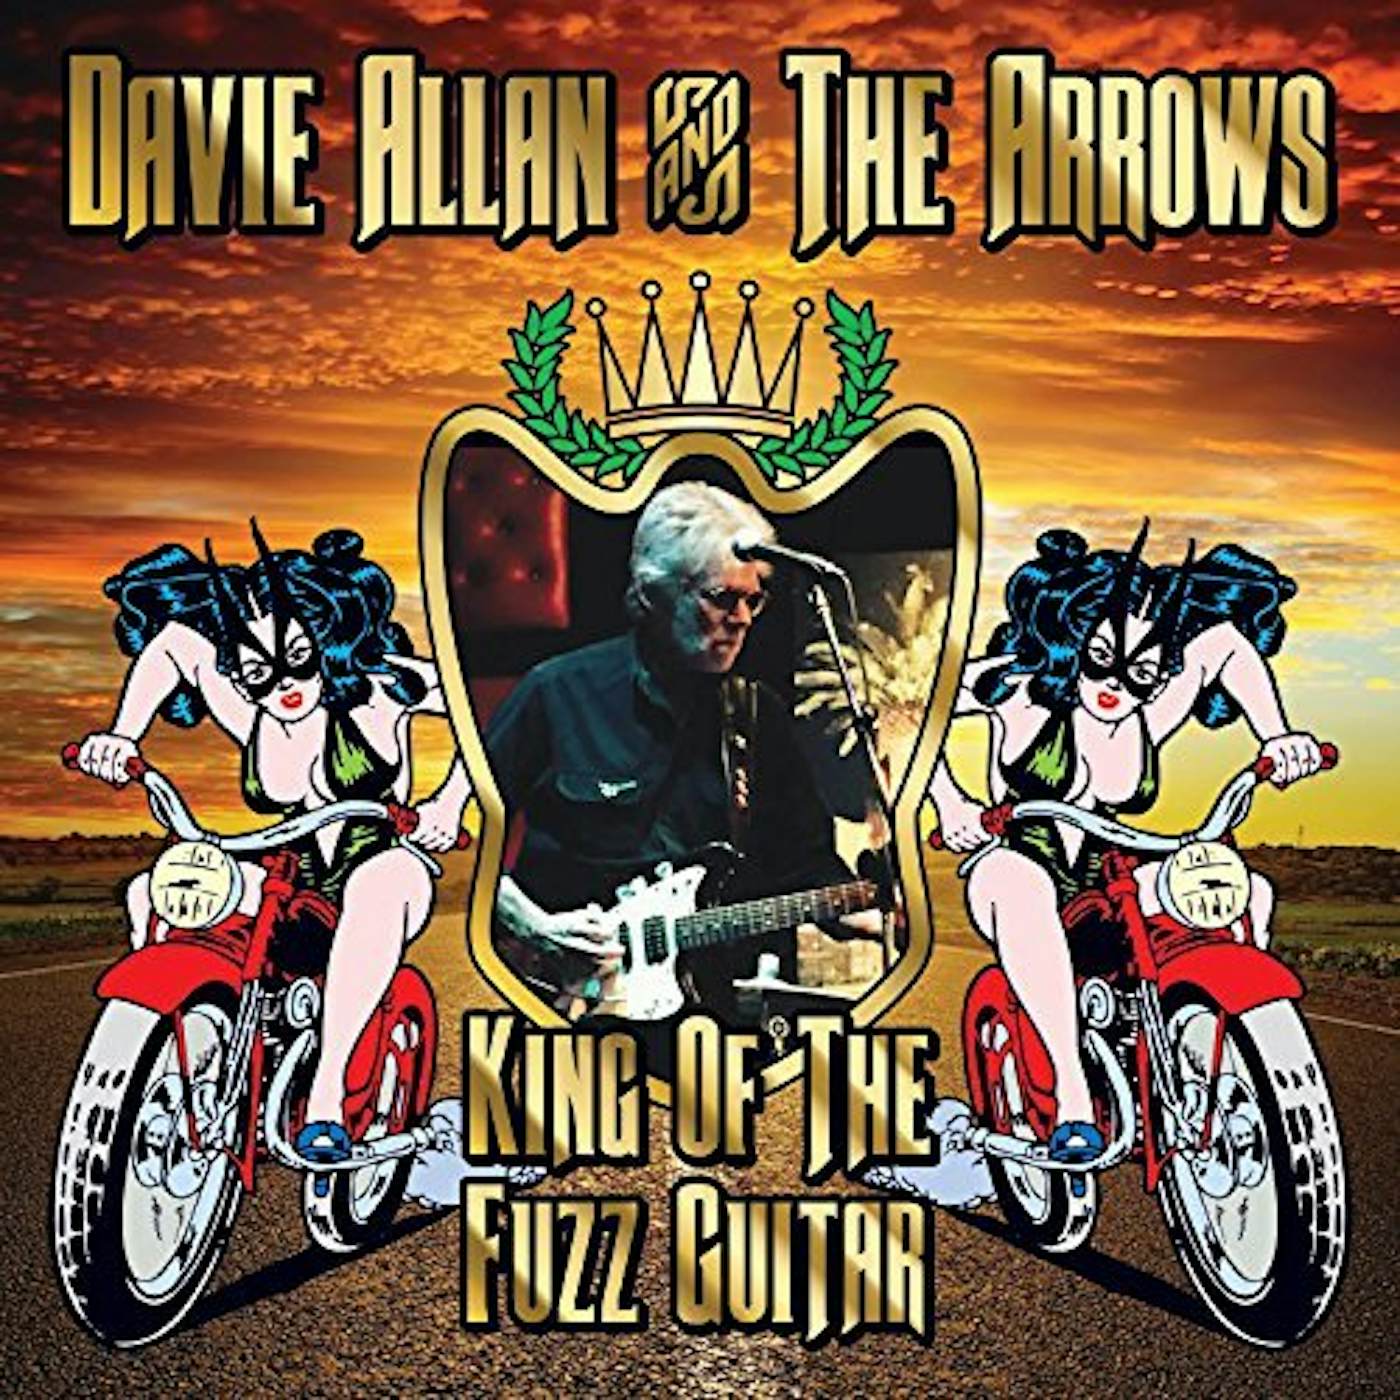 Davie Allan & The Arrows KING OF THE FUZZ GUITAR CD